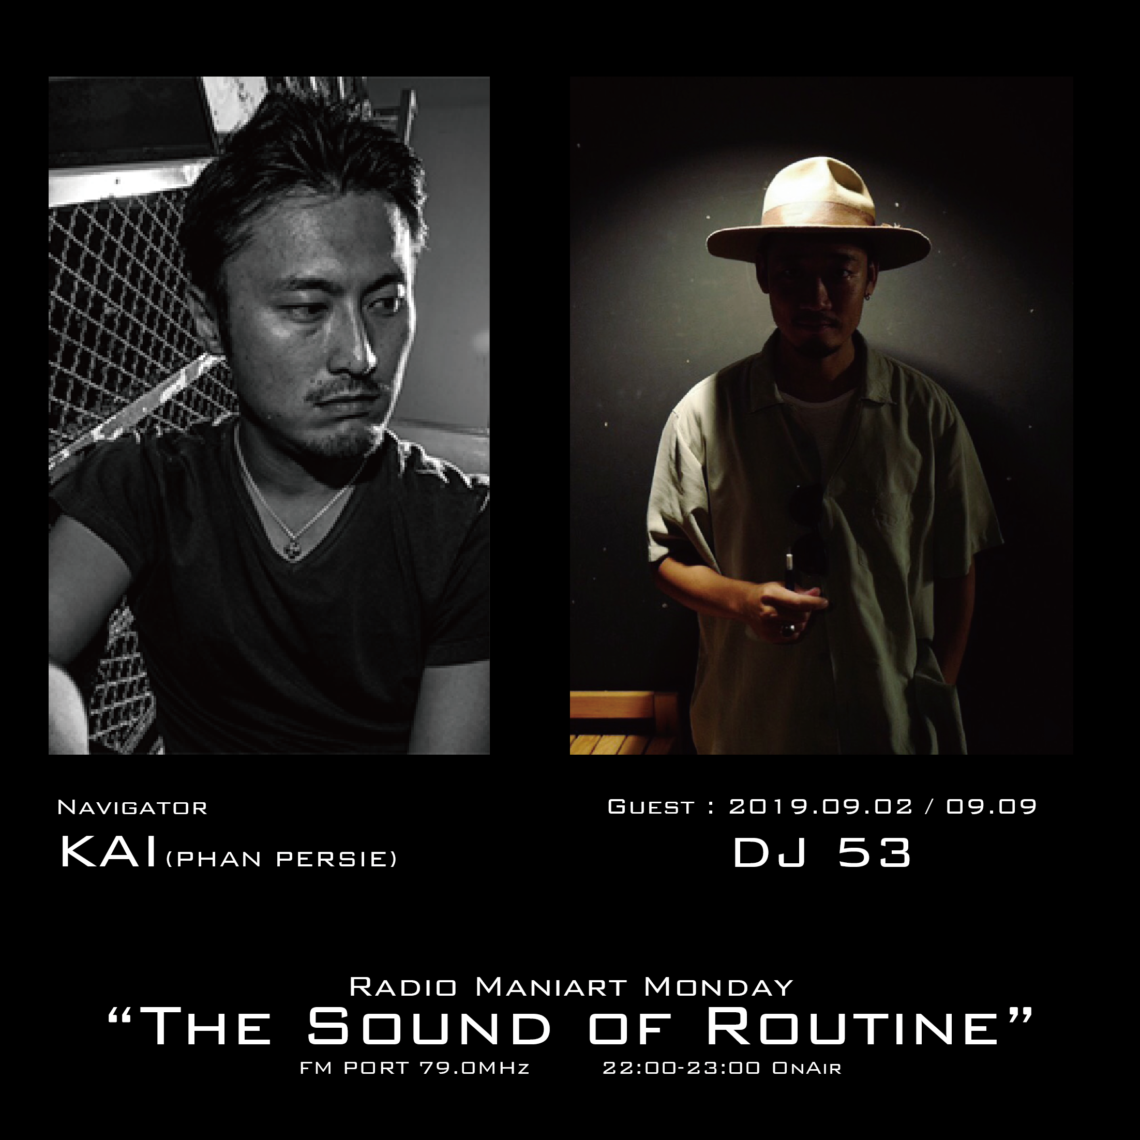 2019. 9. 2 MON, 9. 9 MON – KAI : Navigator on FM PORT / the Sound of Routine – Guest : DJ 53